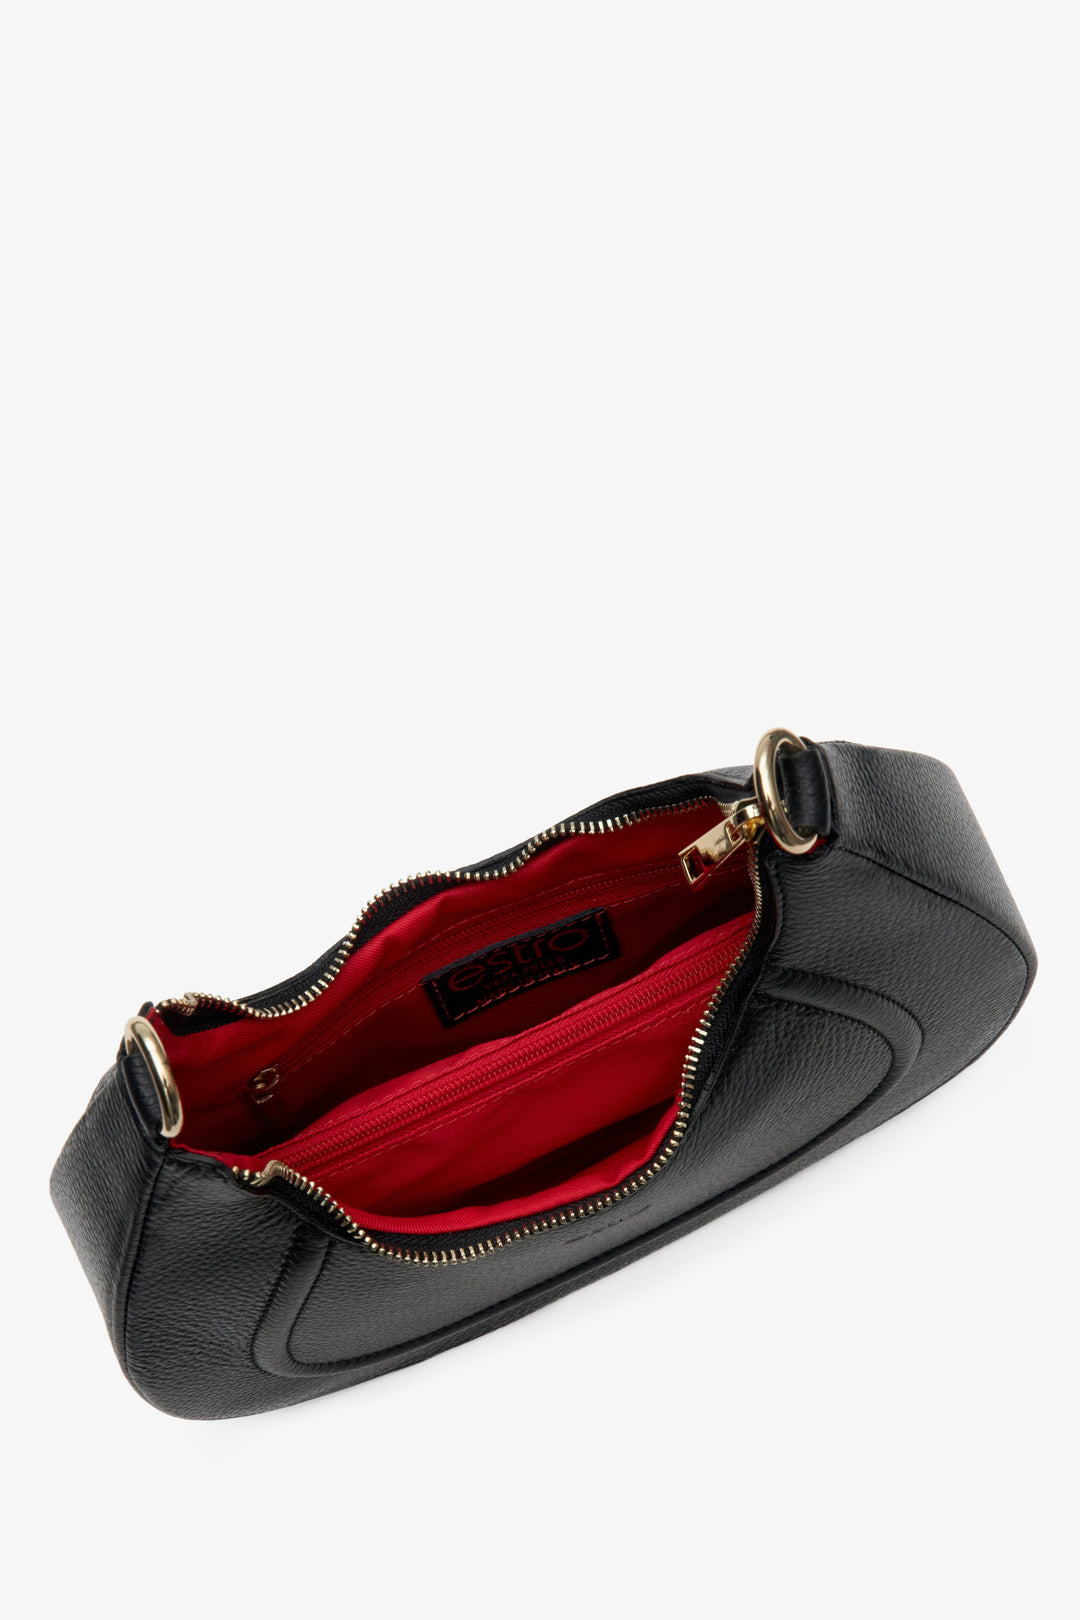 Italian leather black handbag Estro - presentation of the bag inside.